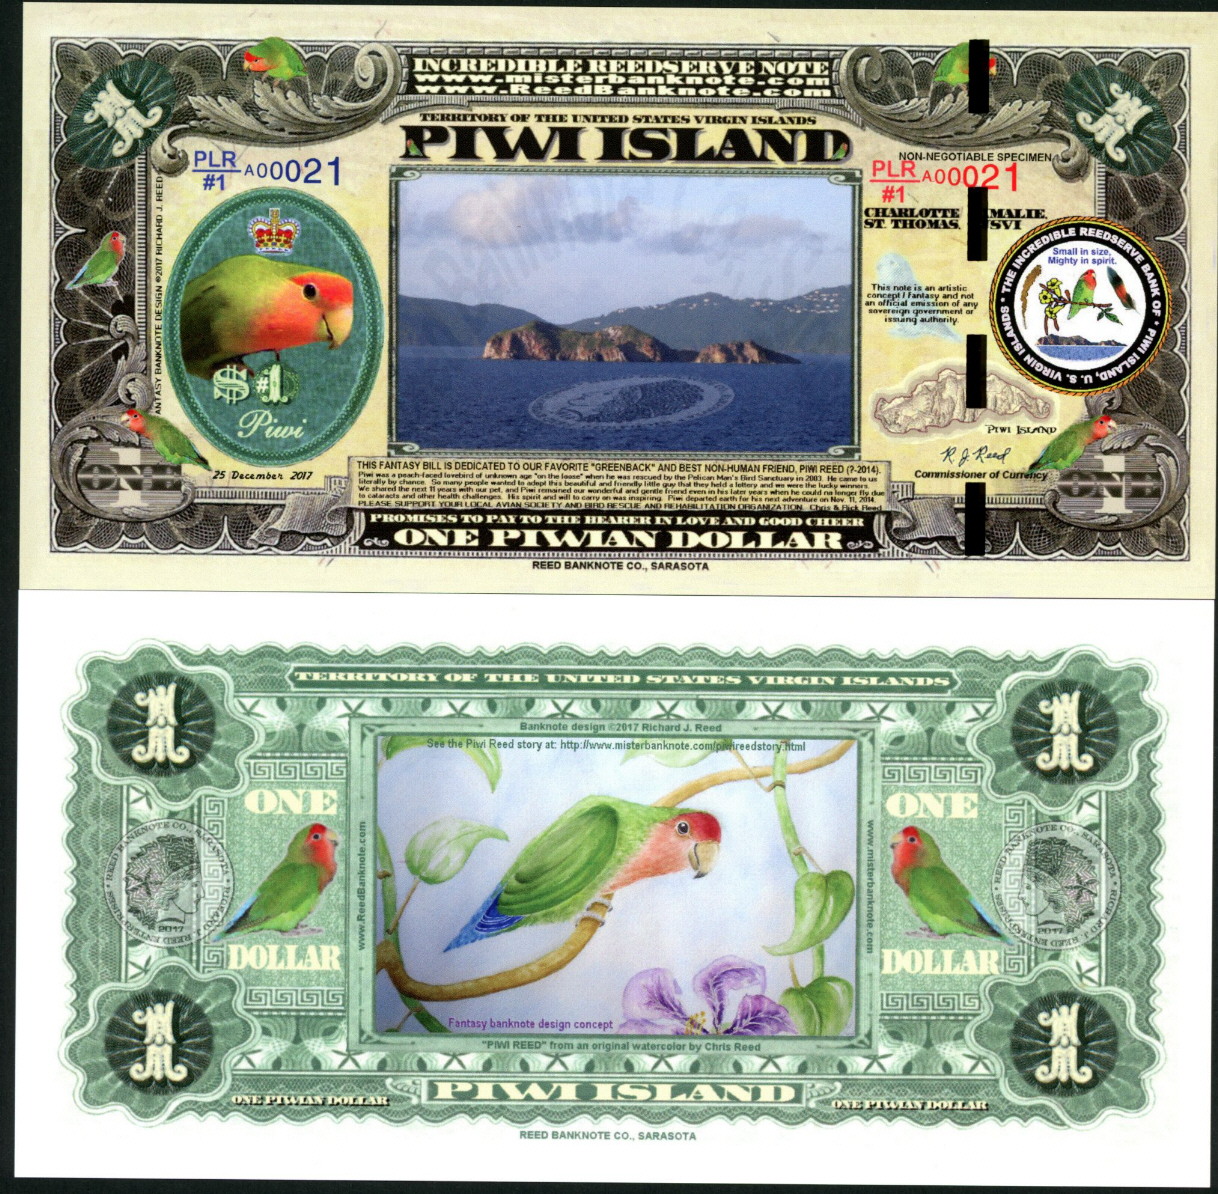 1ST ISSUE PIWI ISLAND USVI LOVEBIRD POLYMER 1 PIWIAN $ FANTASY ART BANKNOTE!